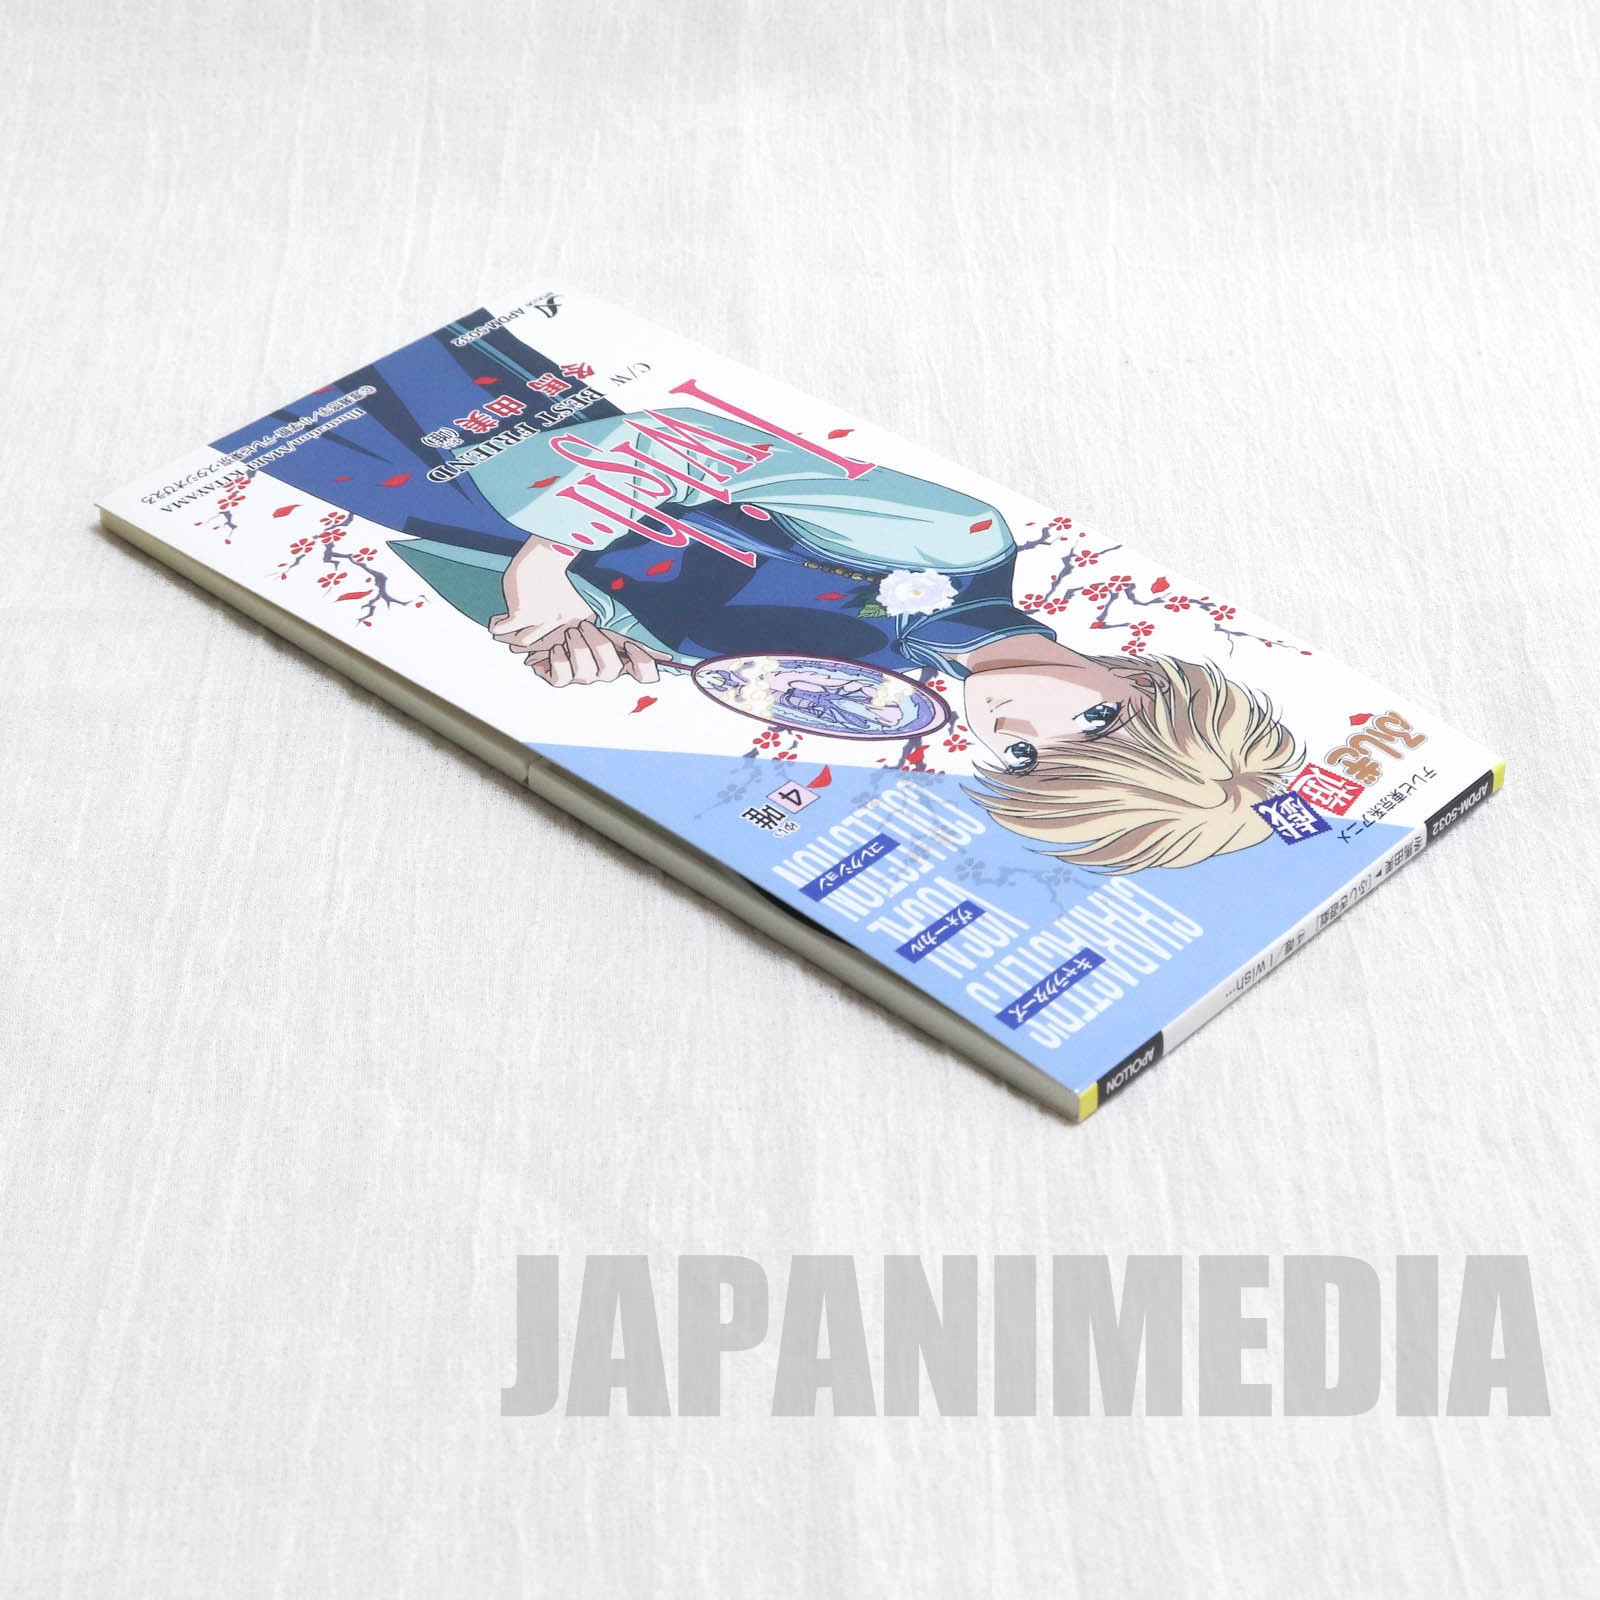 Fushigi Yugi Yui Hongo Characters vocal collection [4] 3 Inch (8cm) Single CD JAPAN 